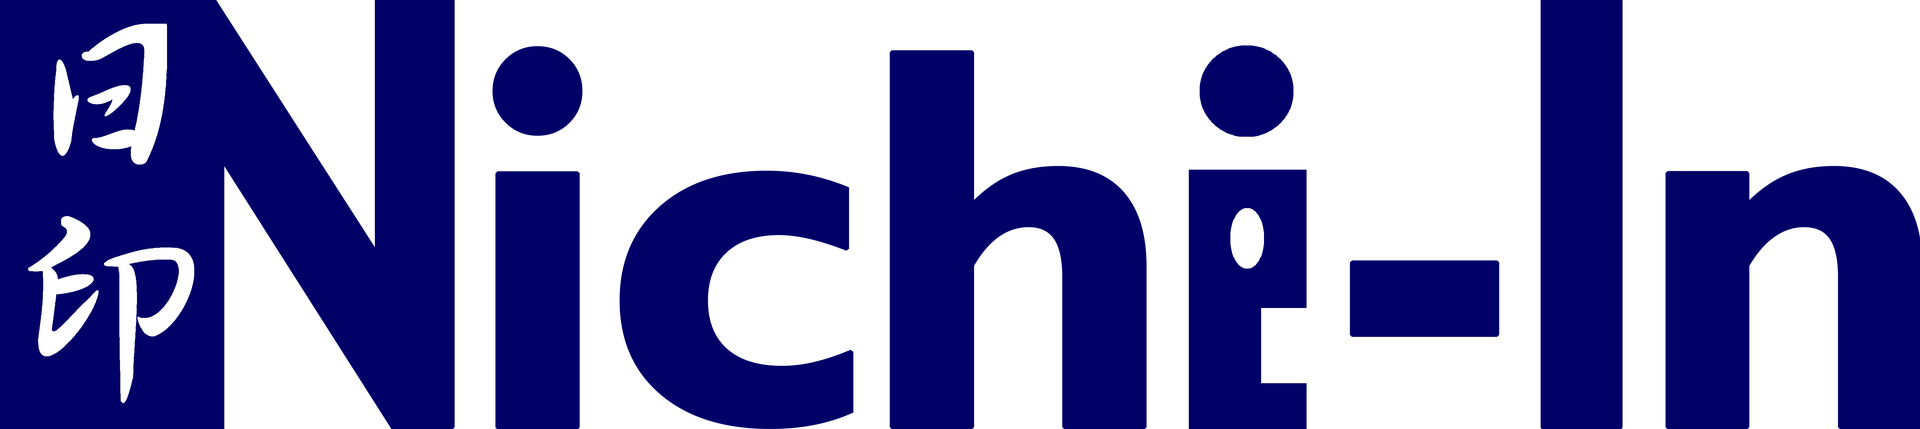 Nichi-In Software Solutions Pvt. Ltd.